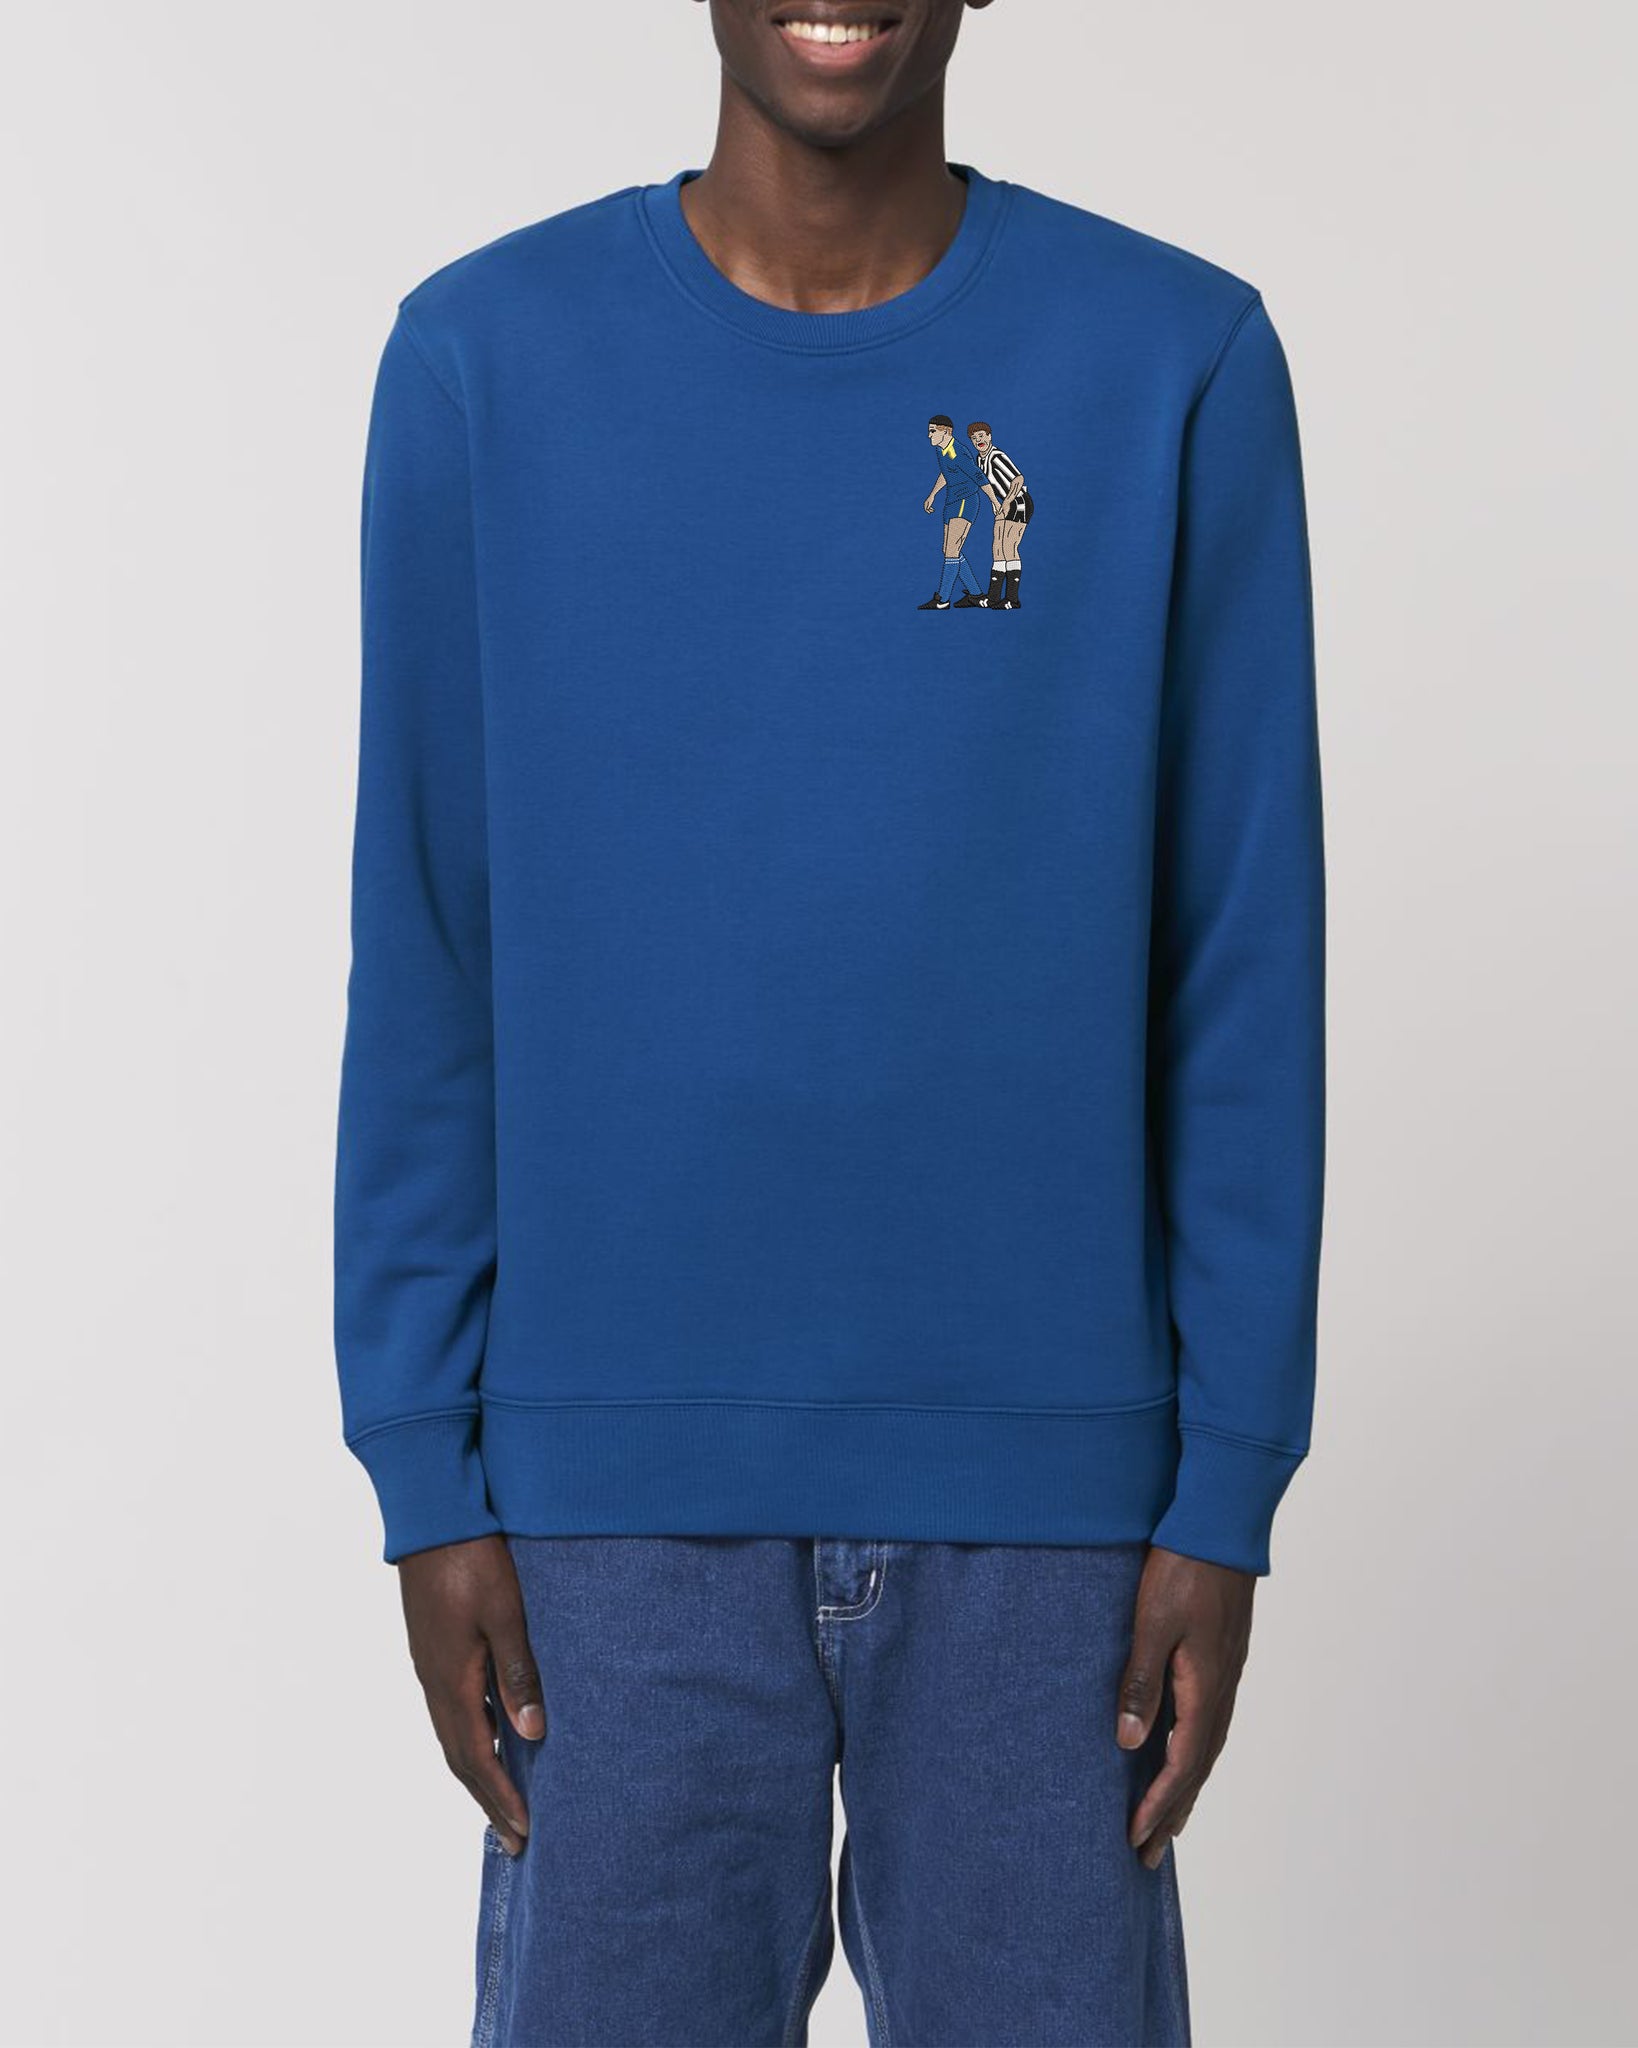 Embroidered Vinnie Jones Sweatshirt